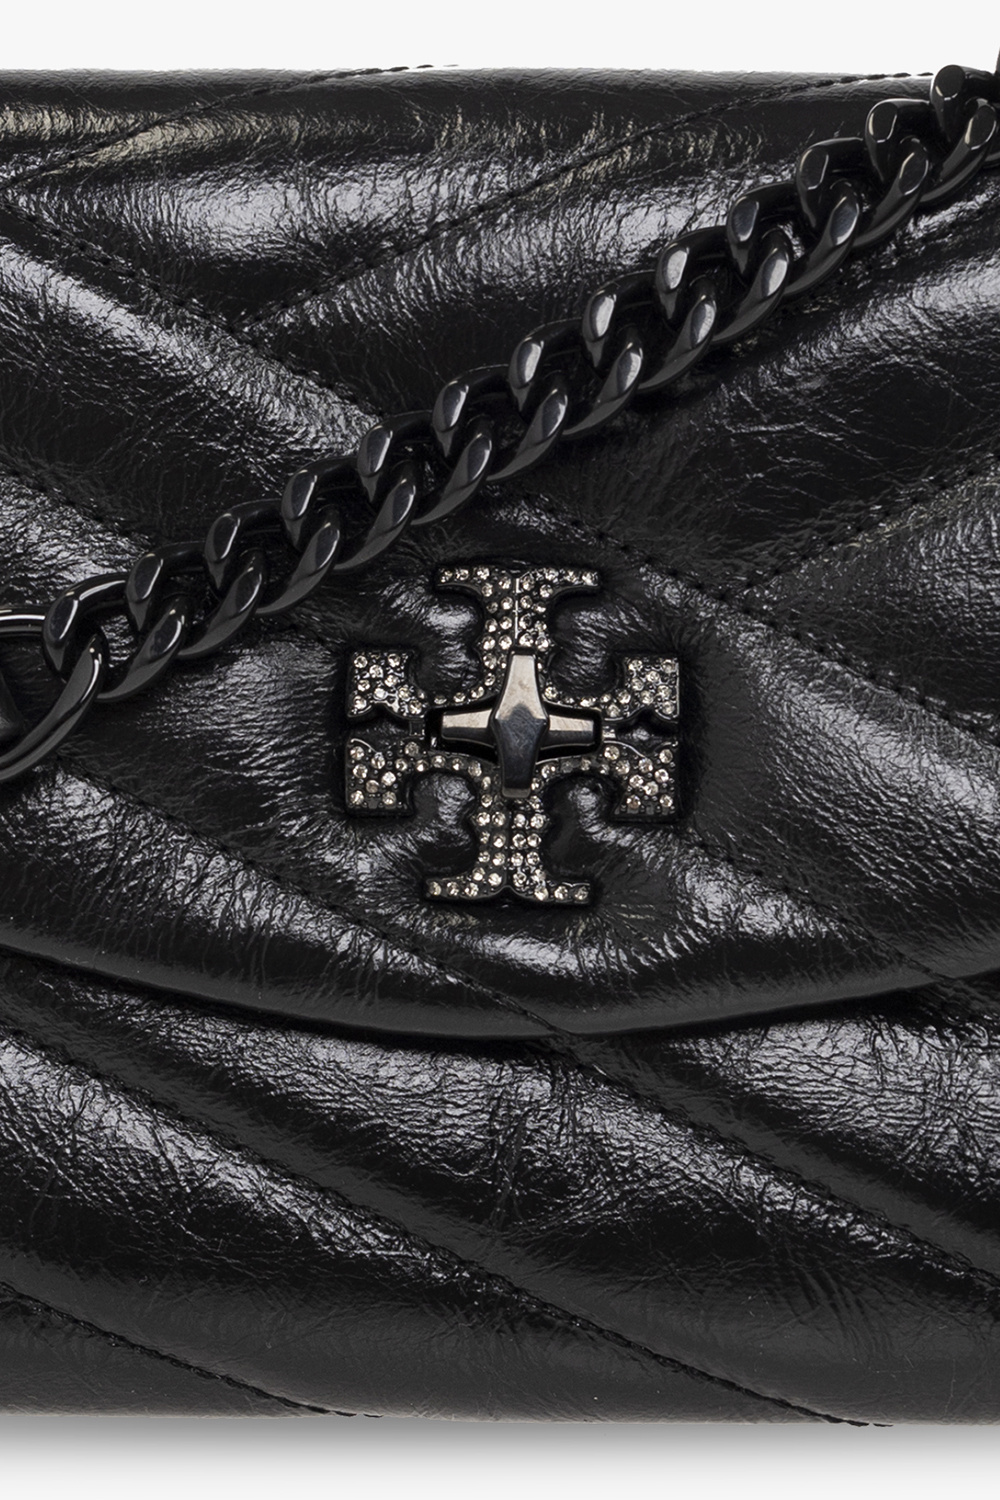 Tory Burch Kira Chevron Leather Wallet-On-Chain Black